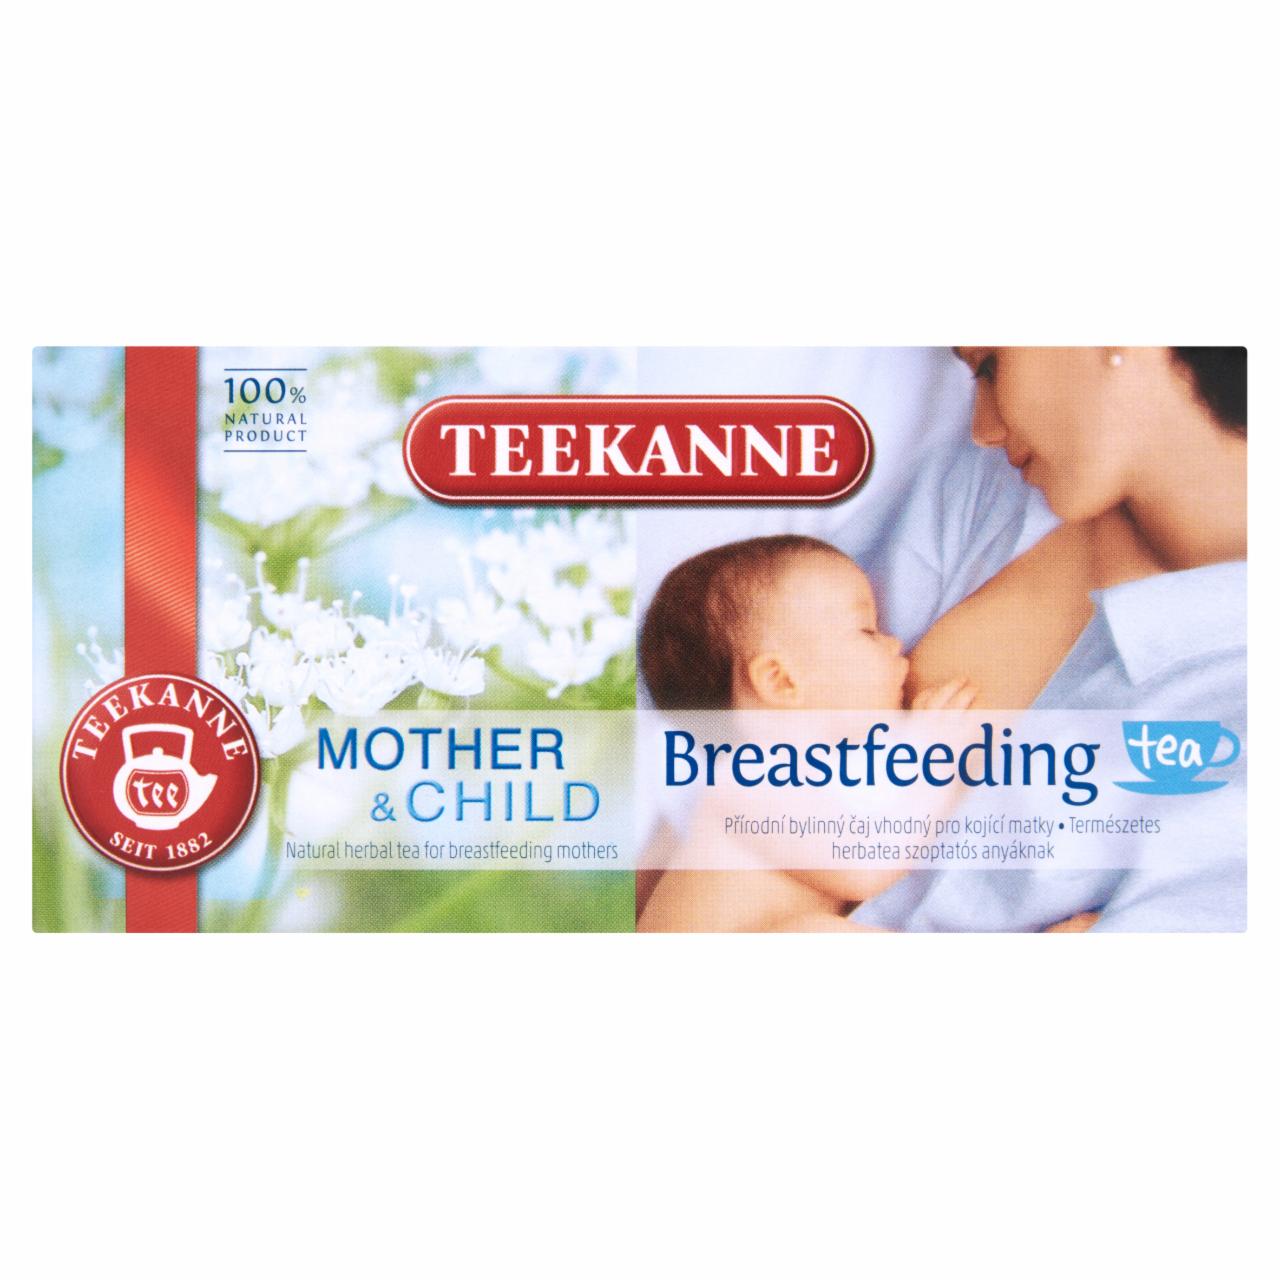 Photo - Teekanne Mother & Child Breastfeeding Tea Natural Herbal Tea 20 Tea Bags 36 g